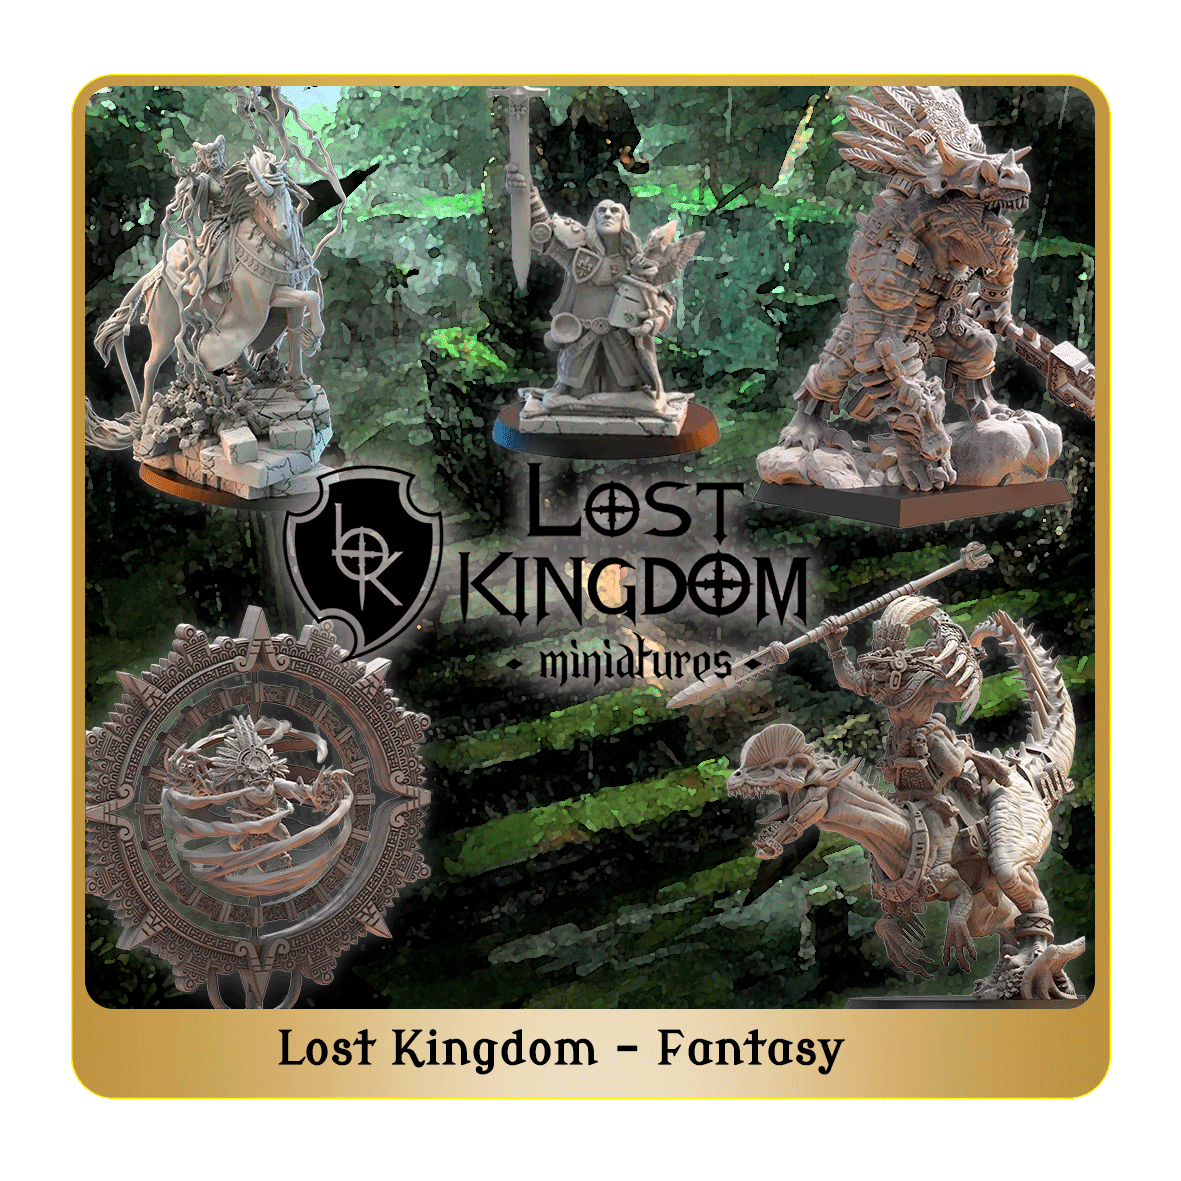 The lost kingdom